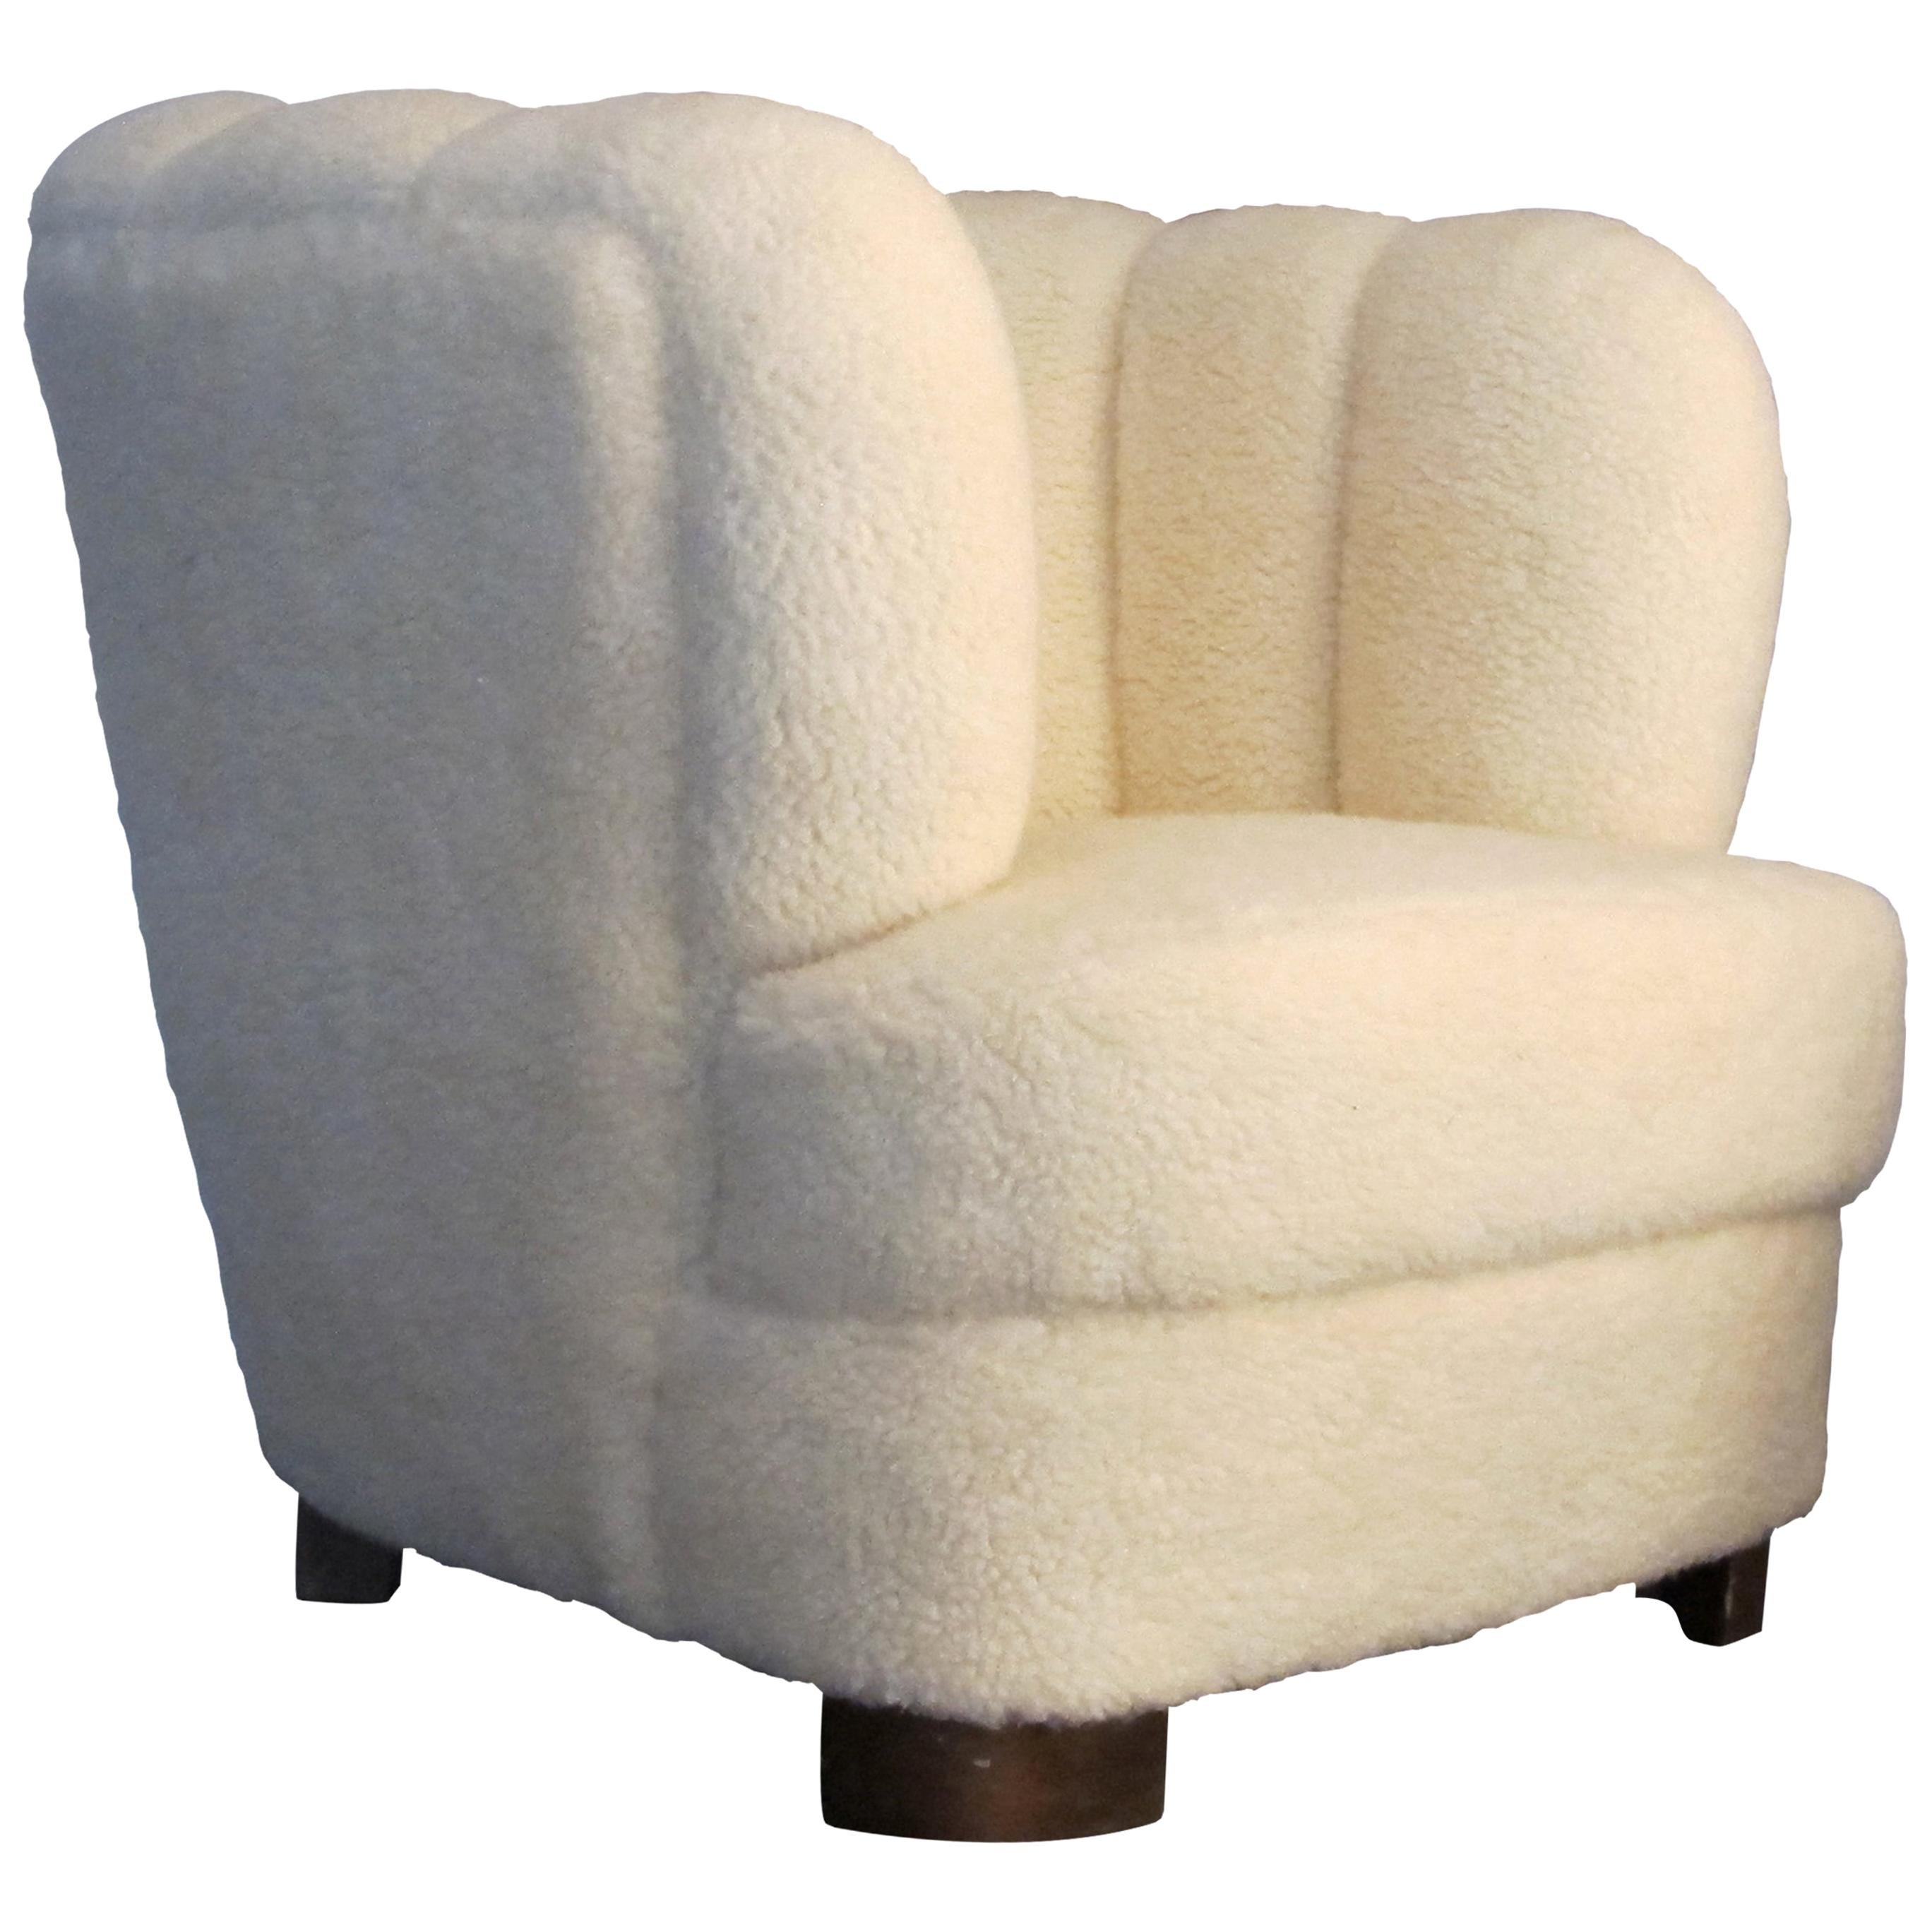 1930s Swedish Snug Art Deco Club Armchair Newly Upholstered in Lambskin Fabric